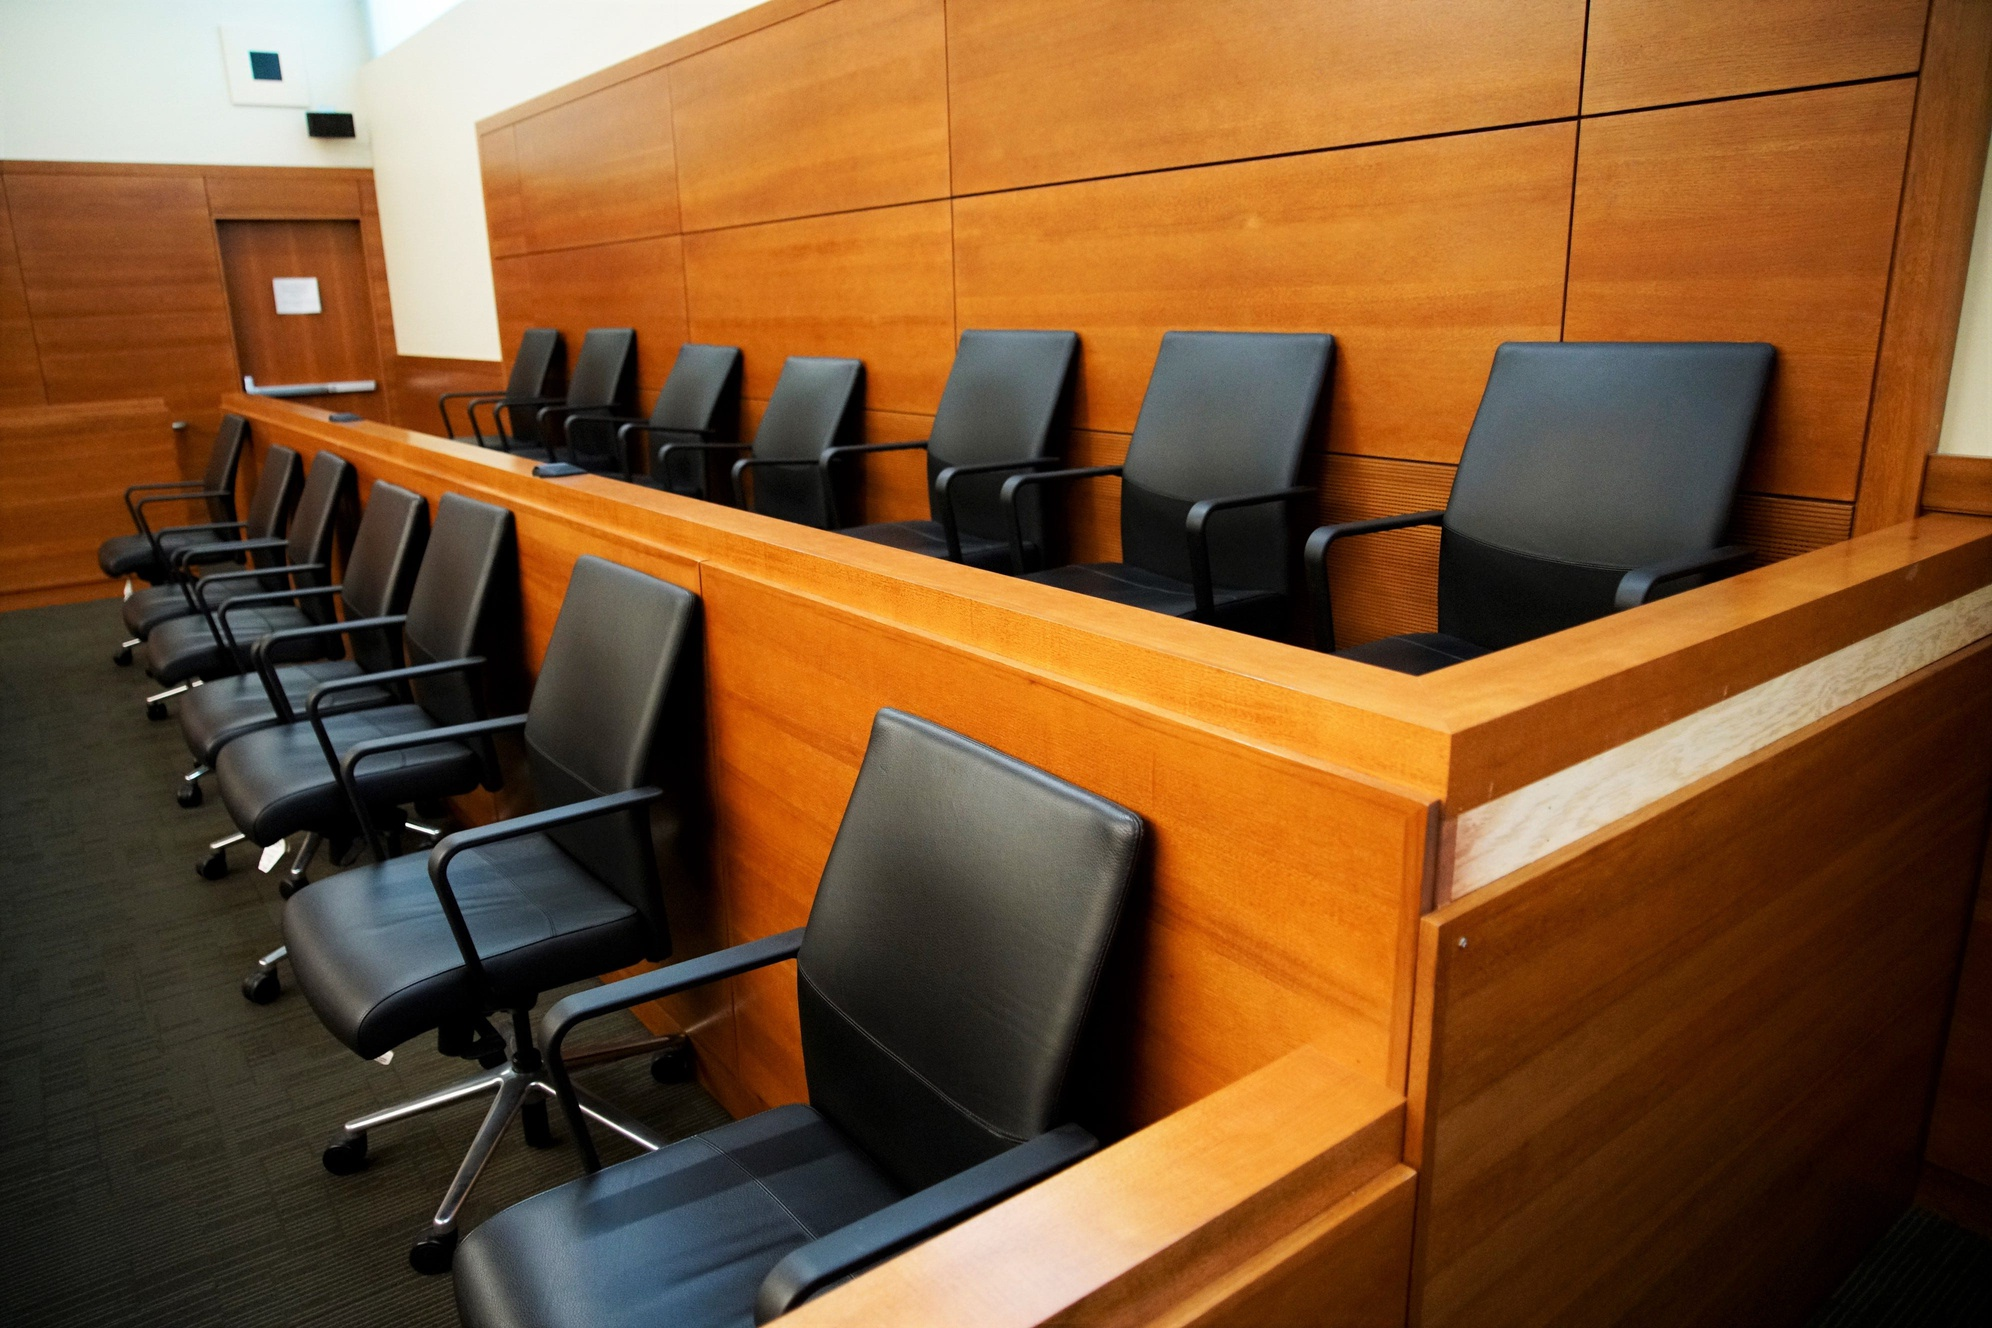 Be aware of jury duty scams warns Metro-East judge